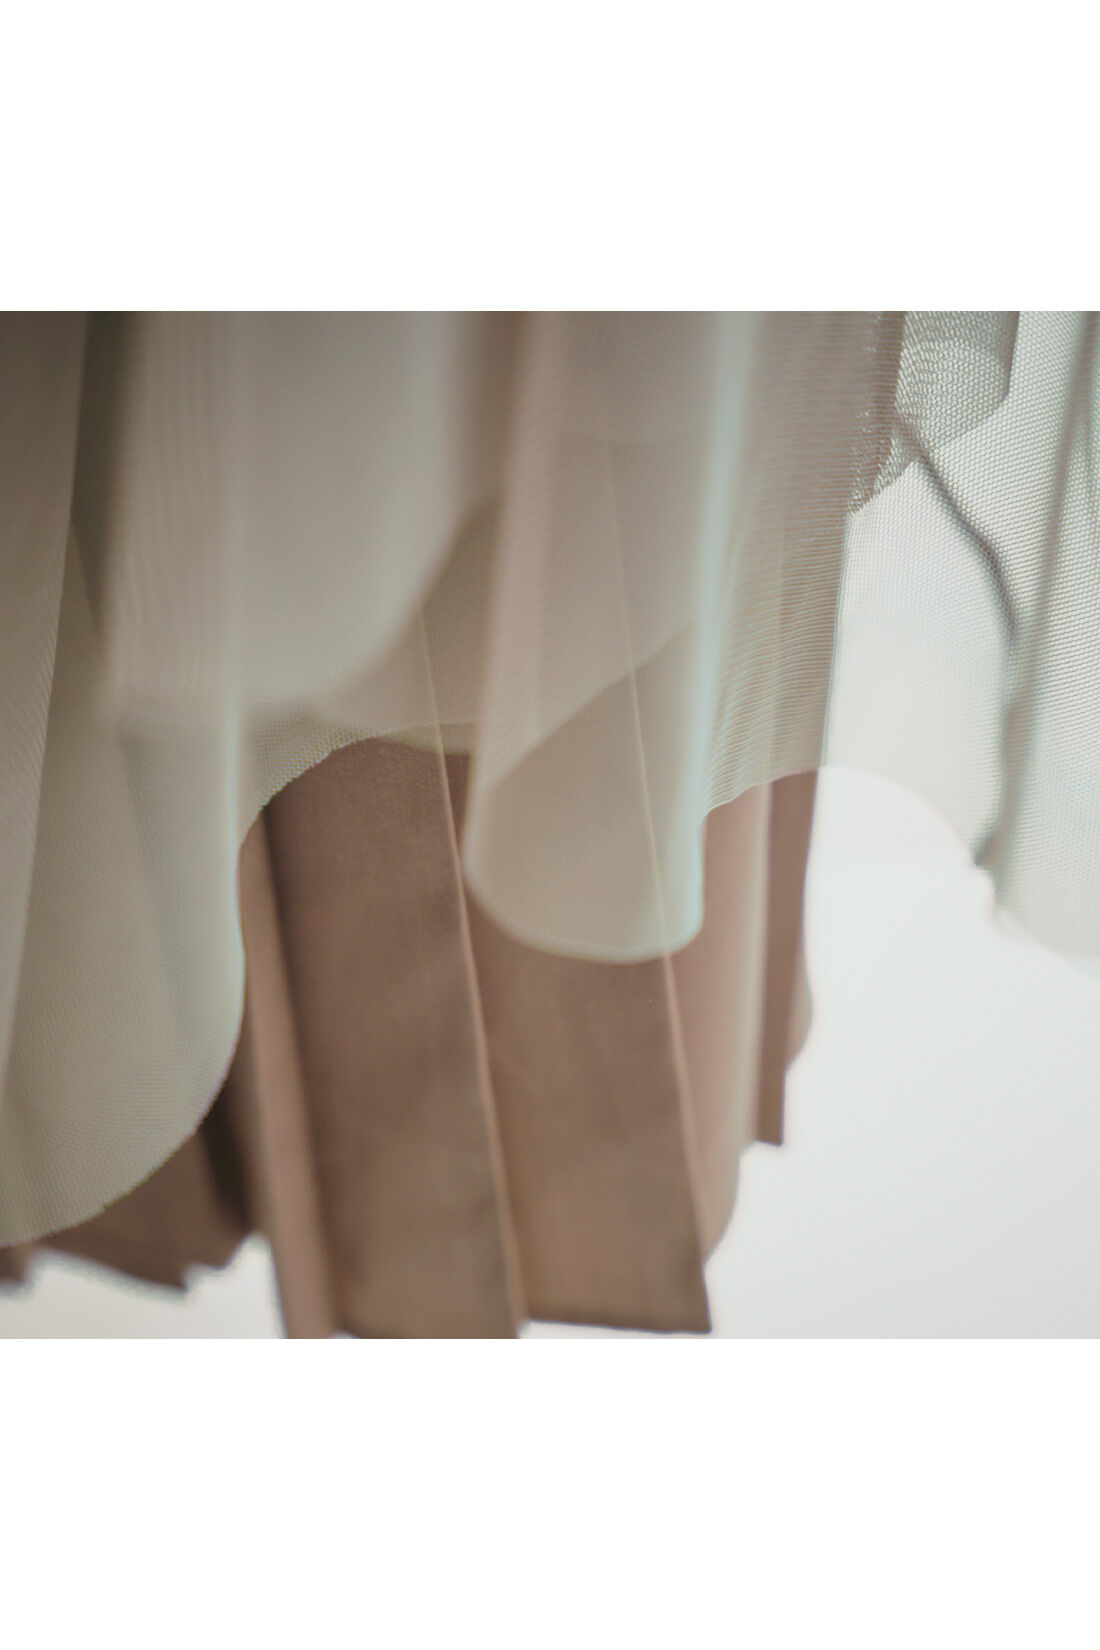 IEDIT[イディット]　プリーツデザインのチュールレイヤードスカート|プリーツ生地の上に、チュールを重ねたこだわりのデザイン。